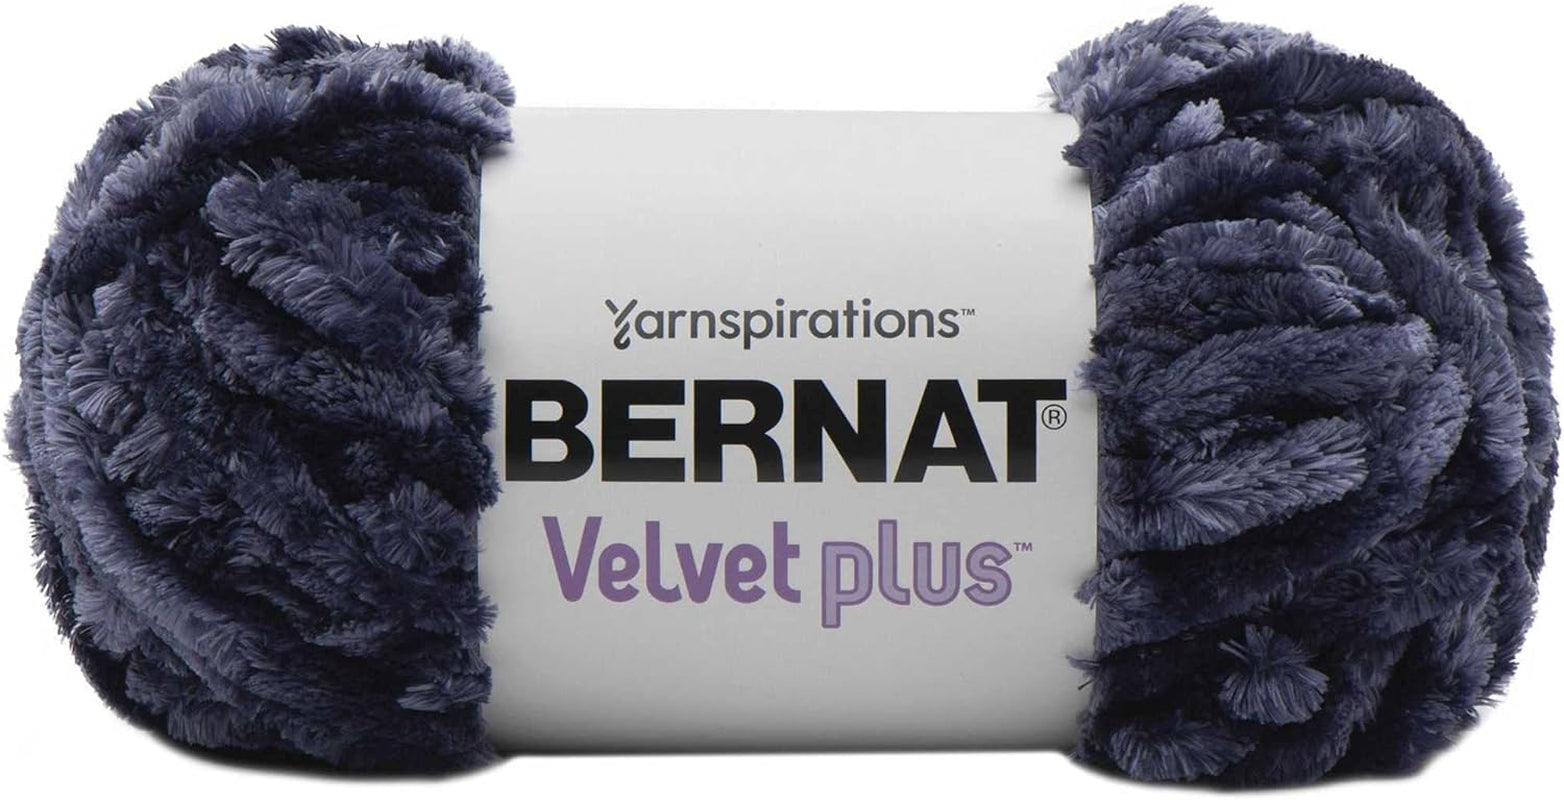 Bernat Velvet plus Indigo Velvet 161256-56008 (2-Skeins - Same Dye Lot) Weight S Bulky #6 Polyester Yarn for Crocheting and Knitting - Bundle with 1 Artsiga Crafts Project Bag